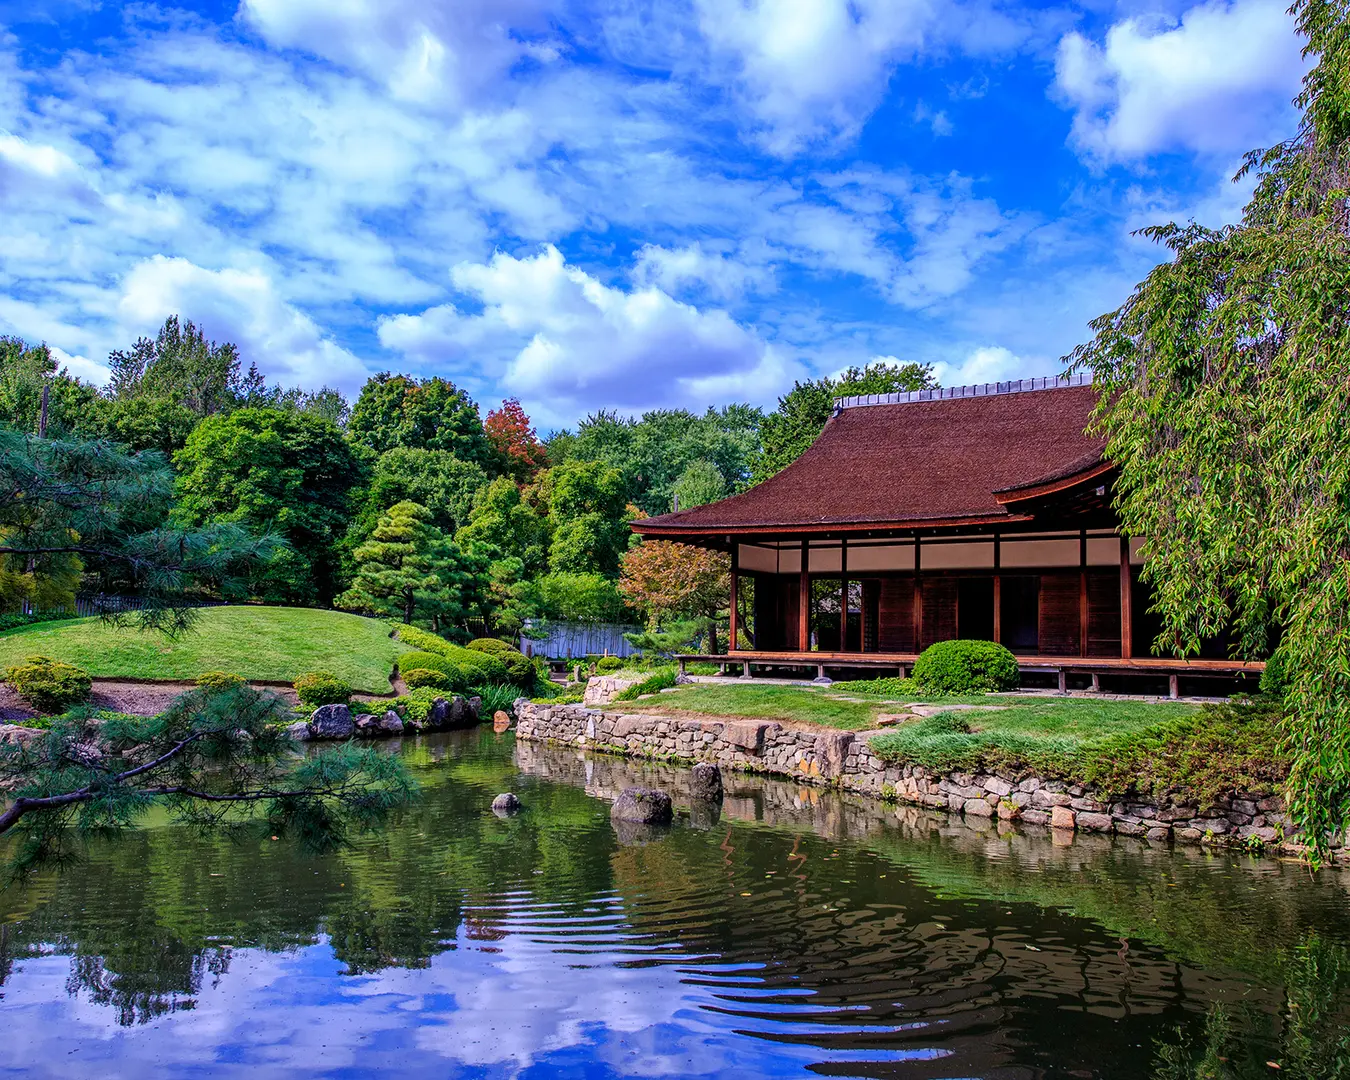 Shofuso Japanese House and Garden. Photo courtesy of the Japan America Society of Greater Philadelphia.